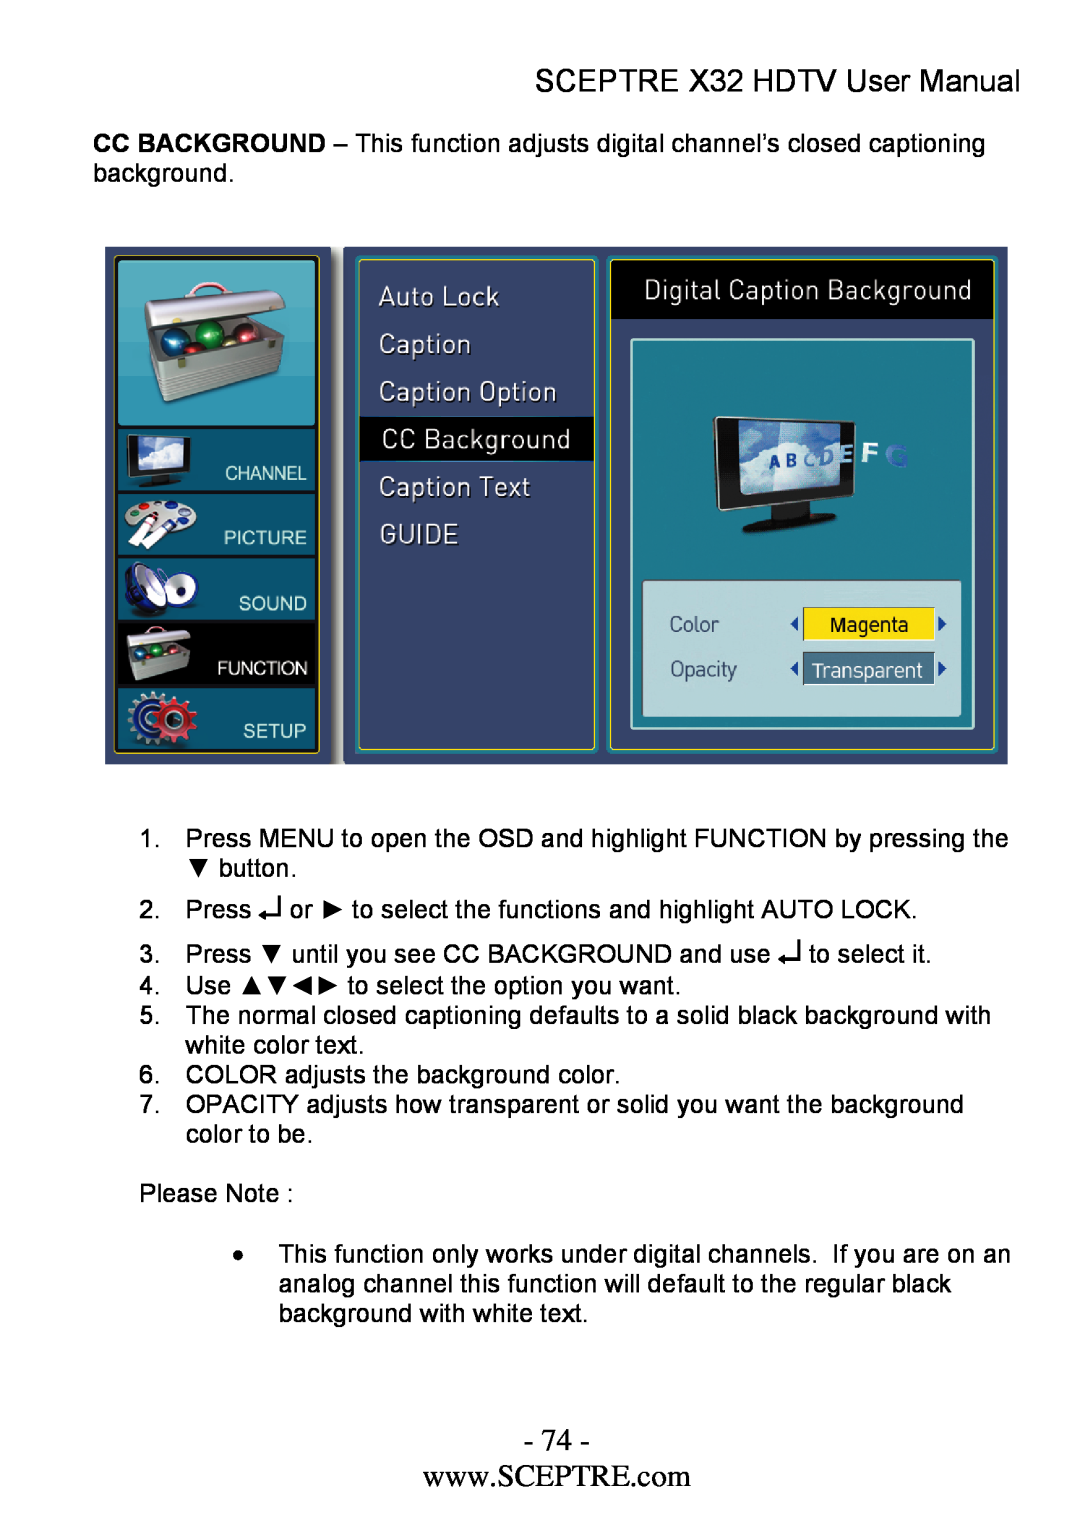 Sceptre Technologies x32 user manual SCEPTRE X32 HDTV User Manual 